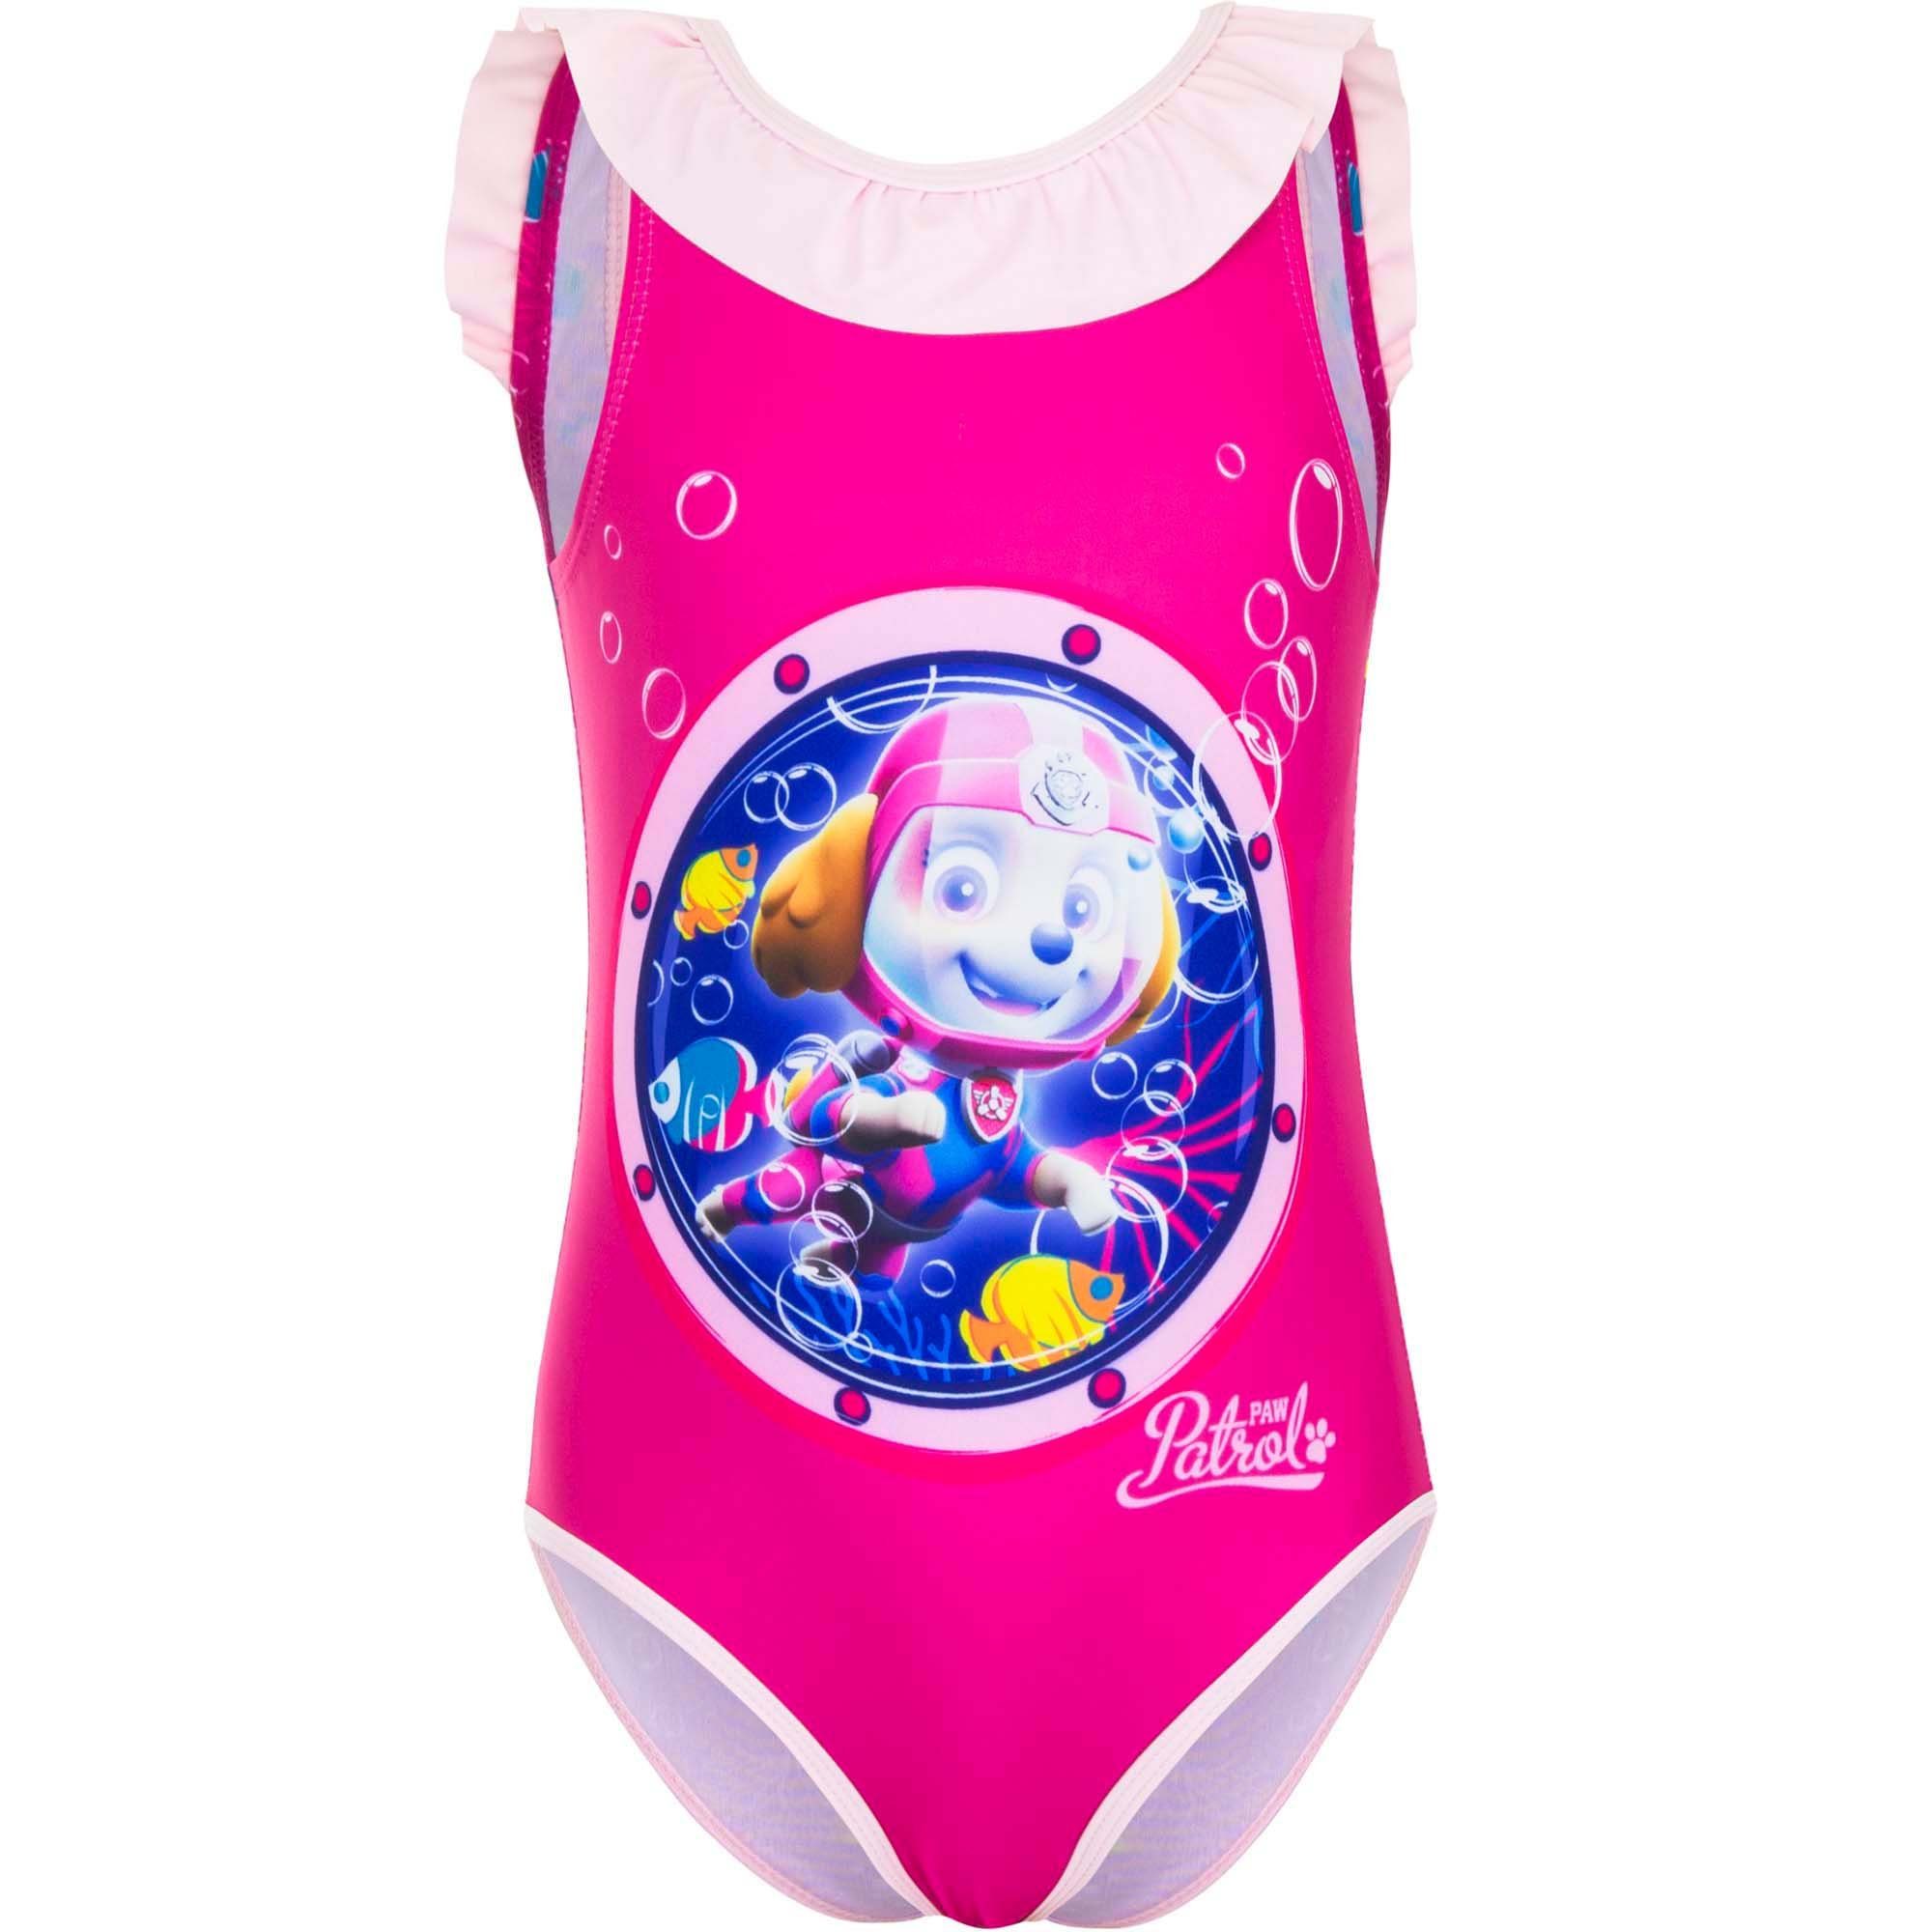 PAW PATROL Badeanzug Kinder Mädchen Bademode Gr. 98 -116 Pink | Badeanzüge